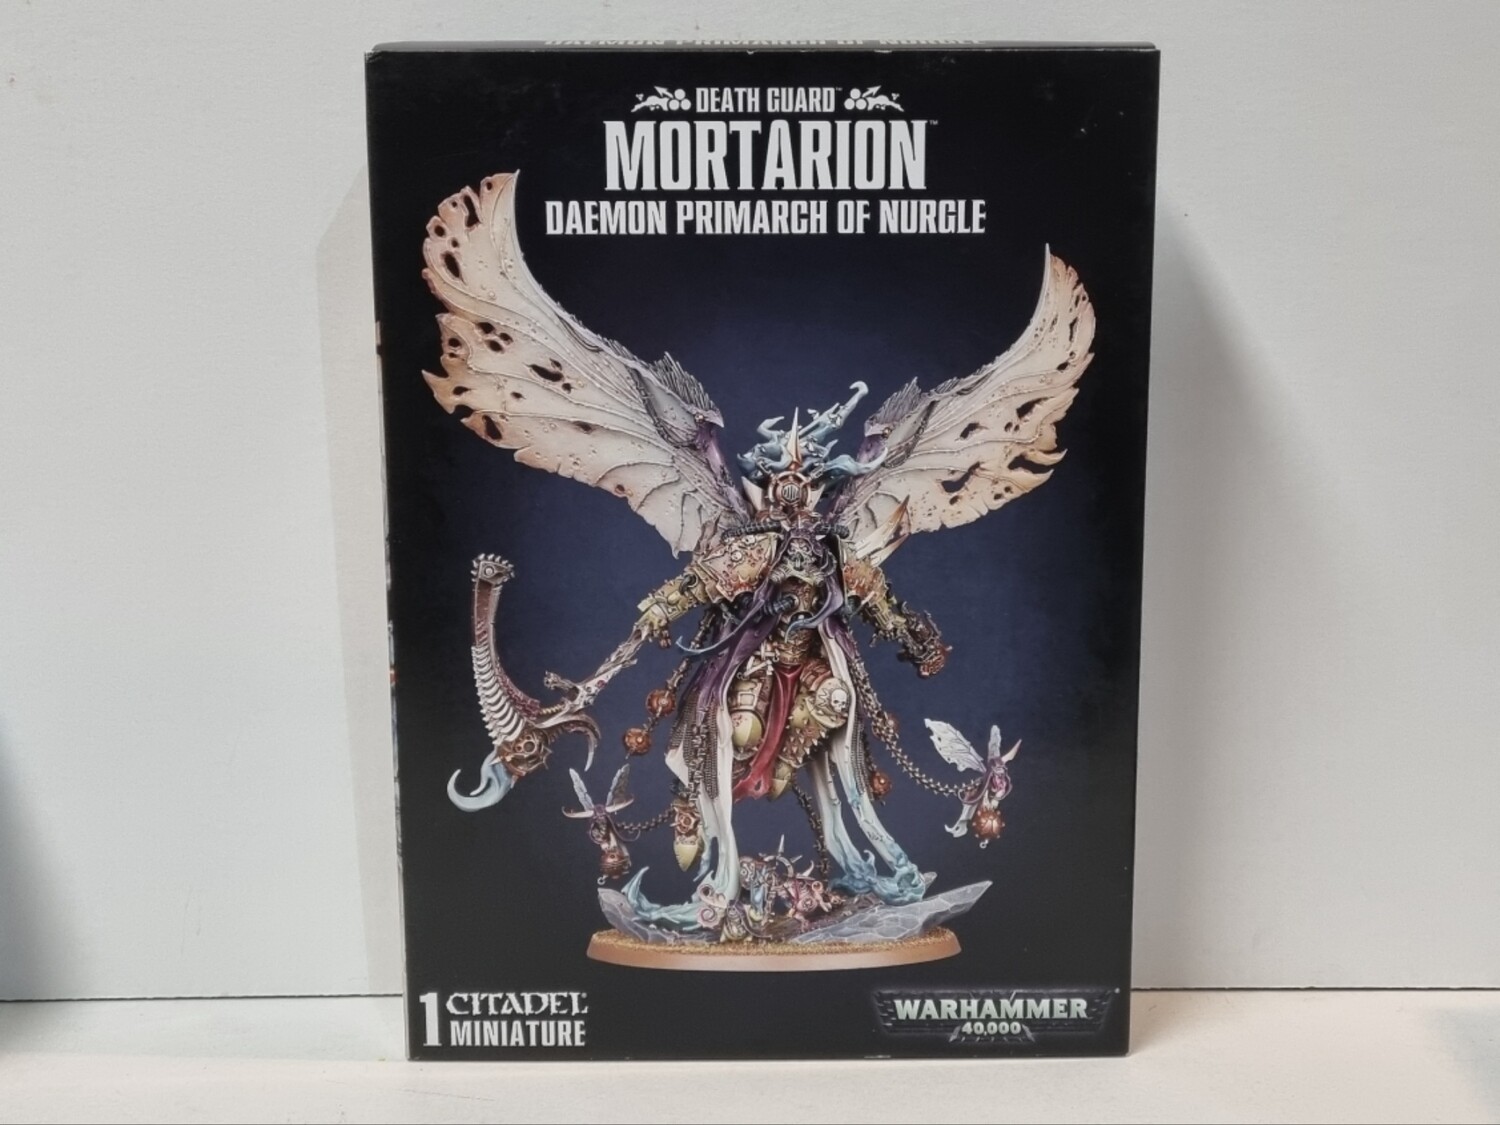 Warhammer, 40k, 43-49, Death Guard Mortarion Daemon Primarch of Nurgle